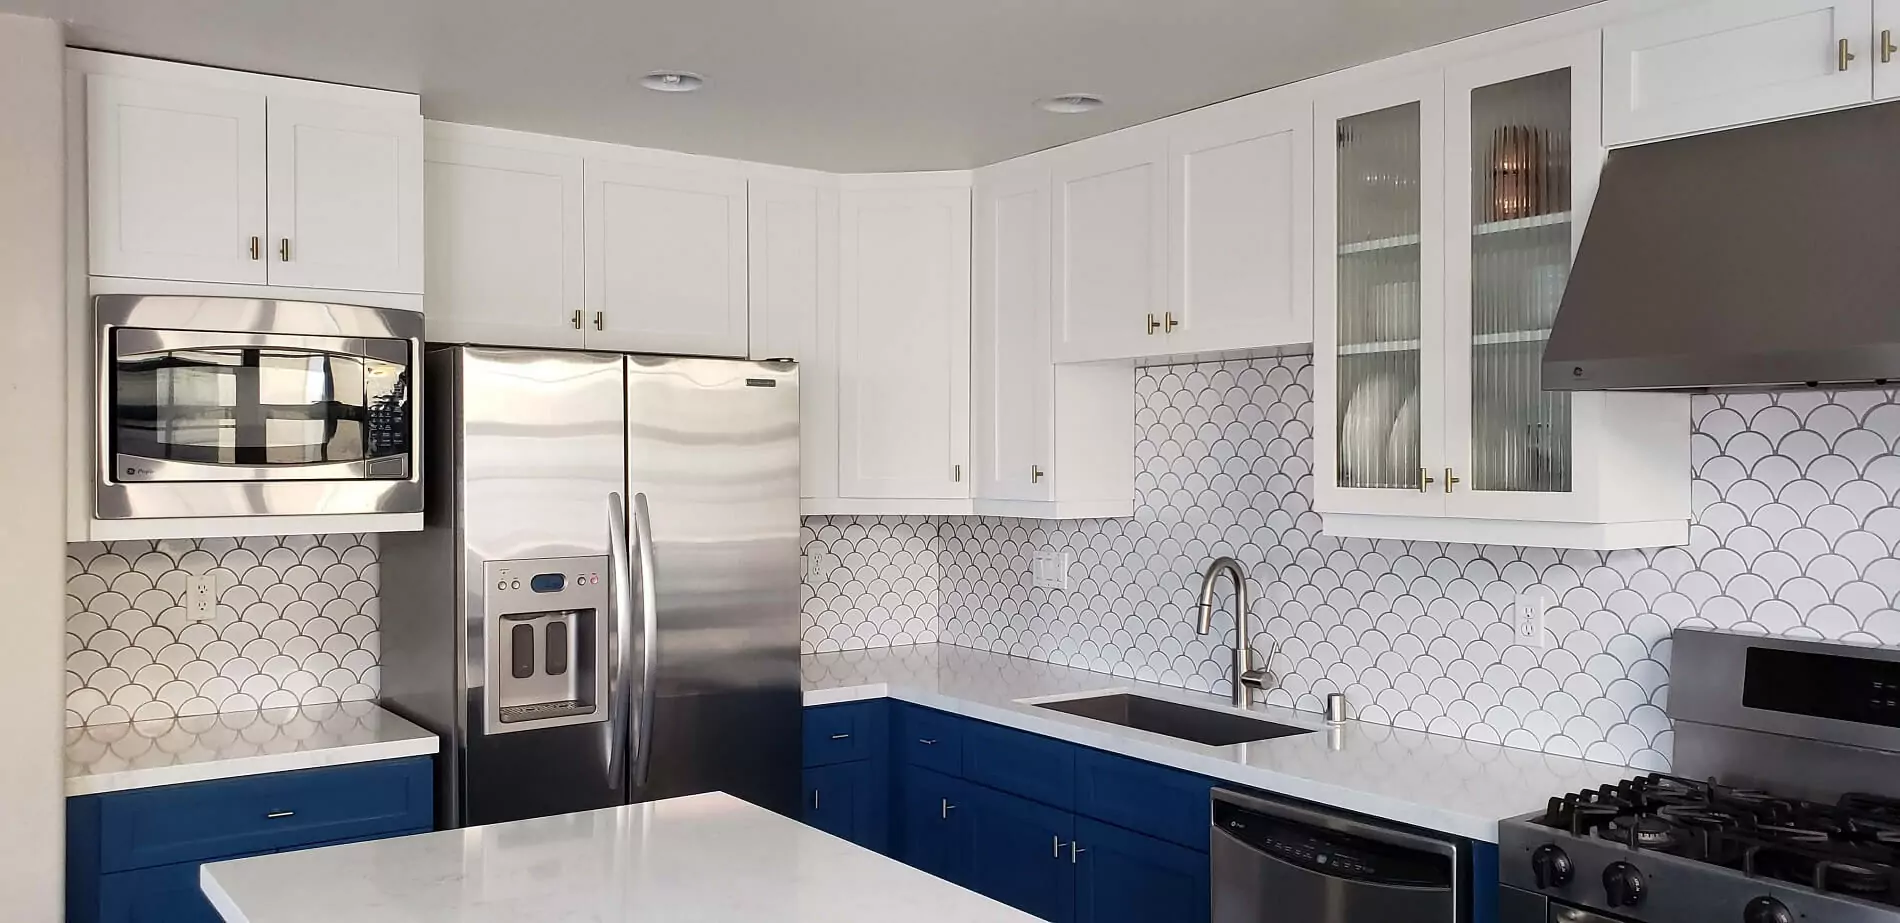 Groysman Construction Remodeling | Navy Blue & White Kitchen Renovation